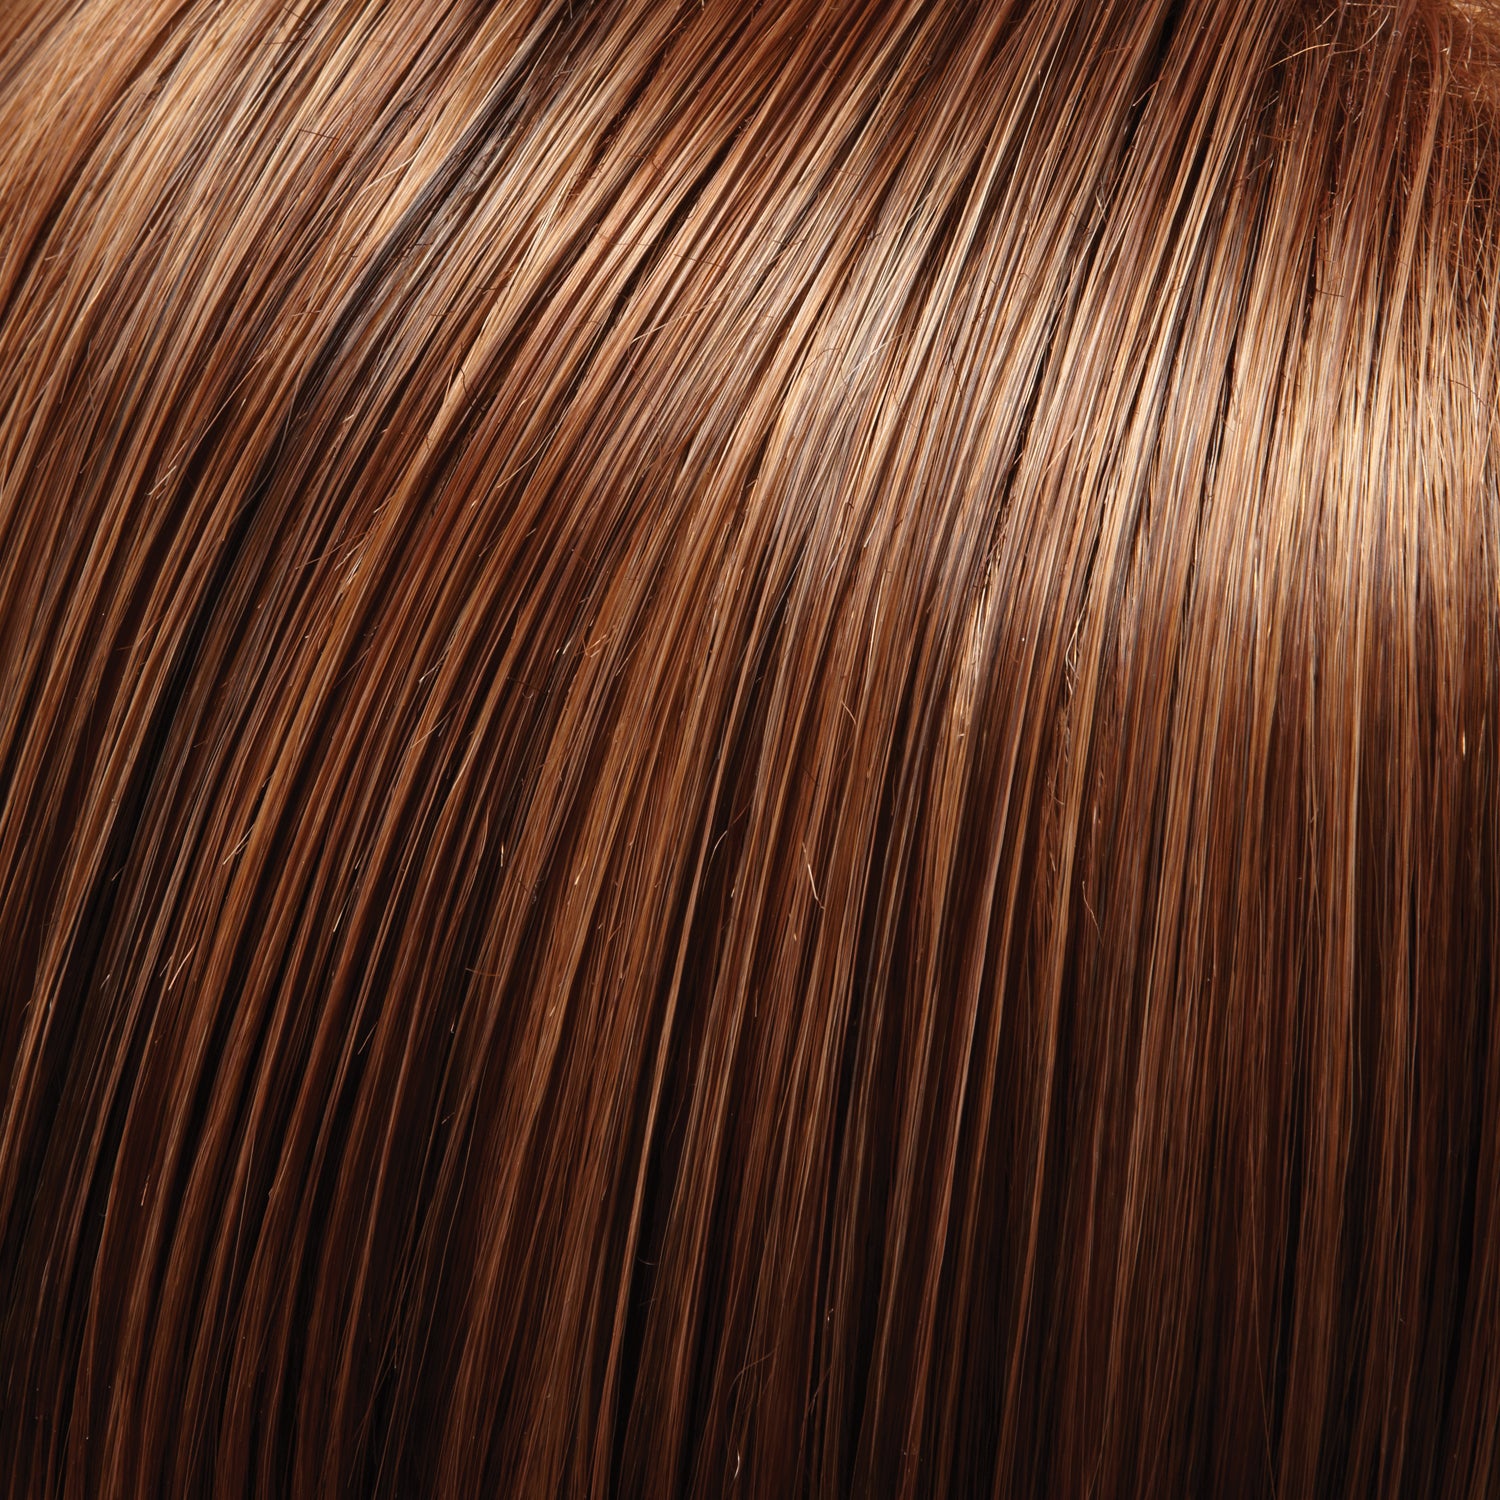 Sophia wig - Jon Renau SmartLace Human Hair Collection